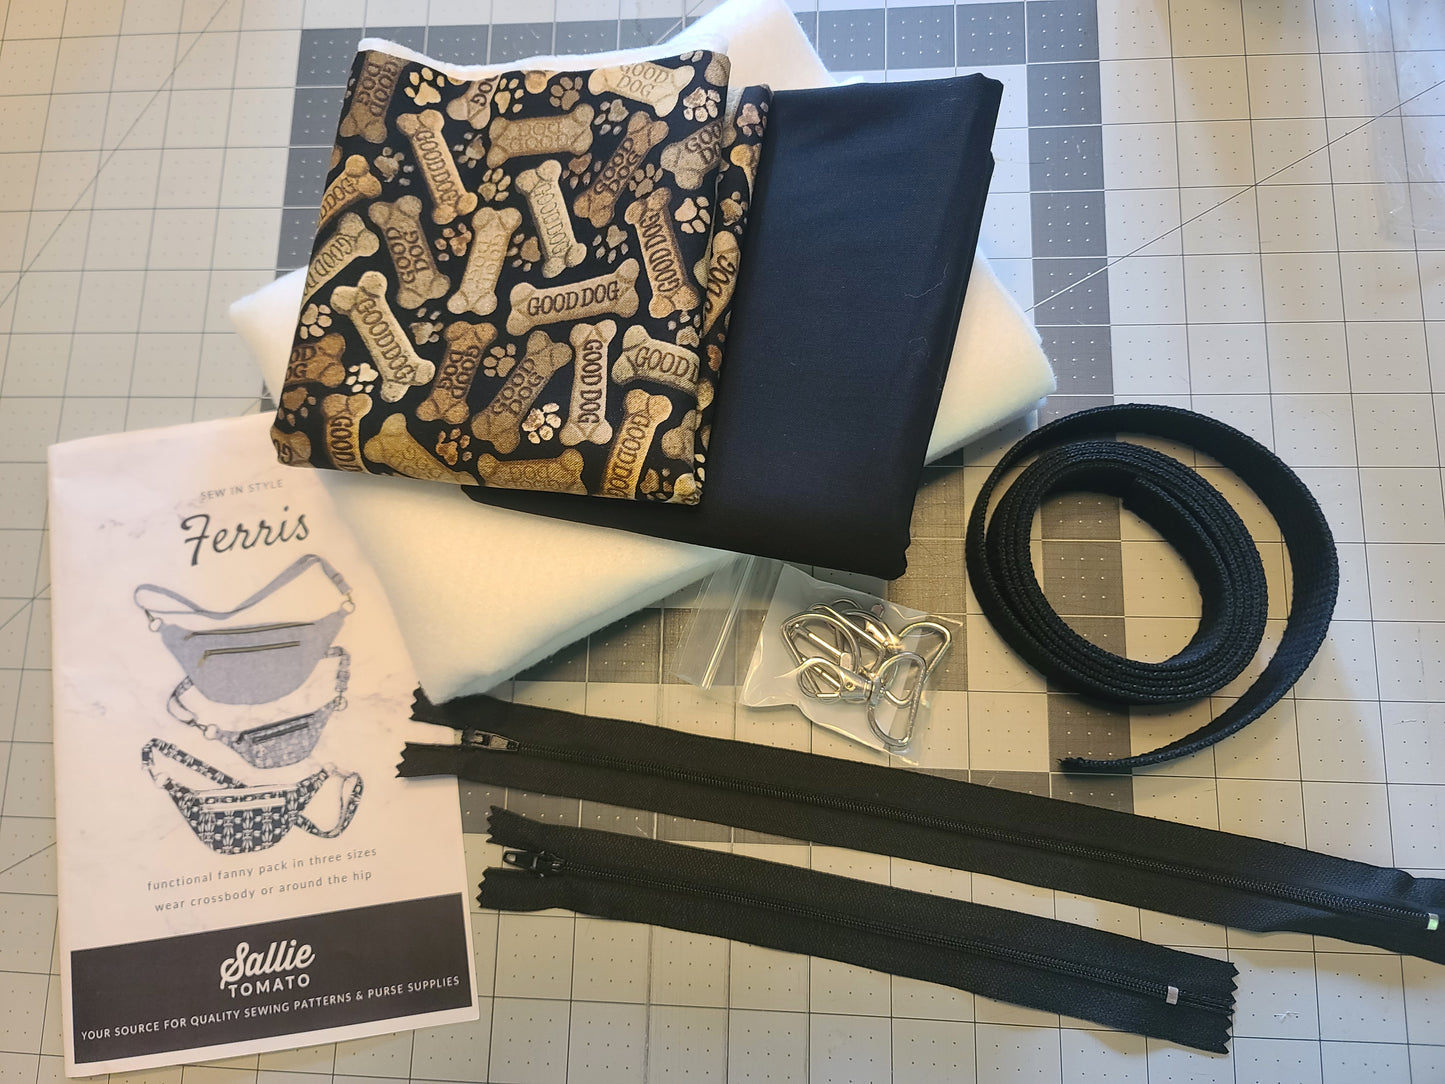 FERRIS FANNIE PACK KIT [medium] - Regular sewing machine and beginner friendly!